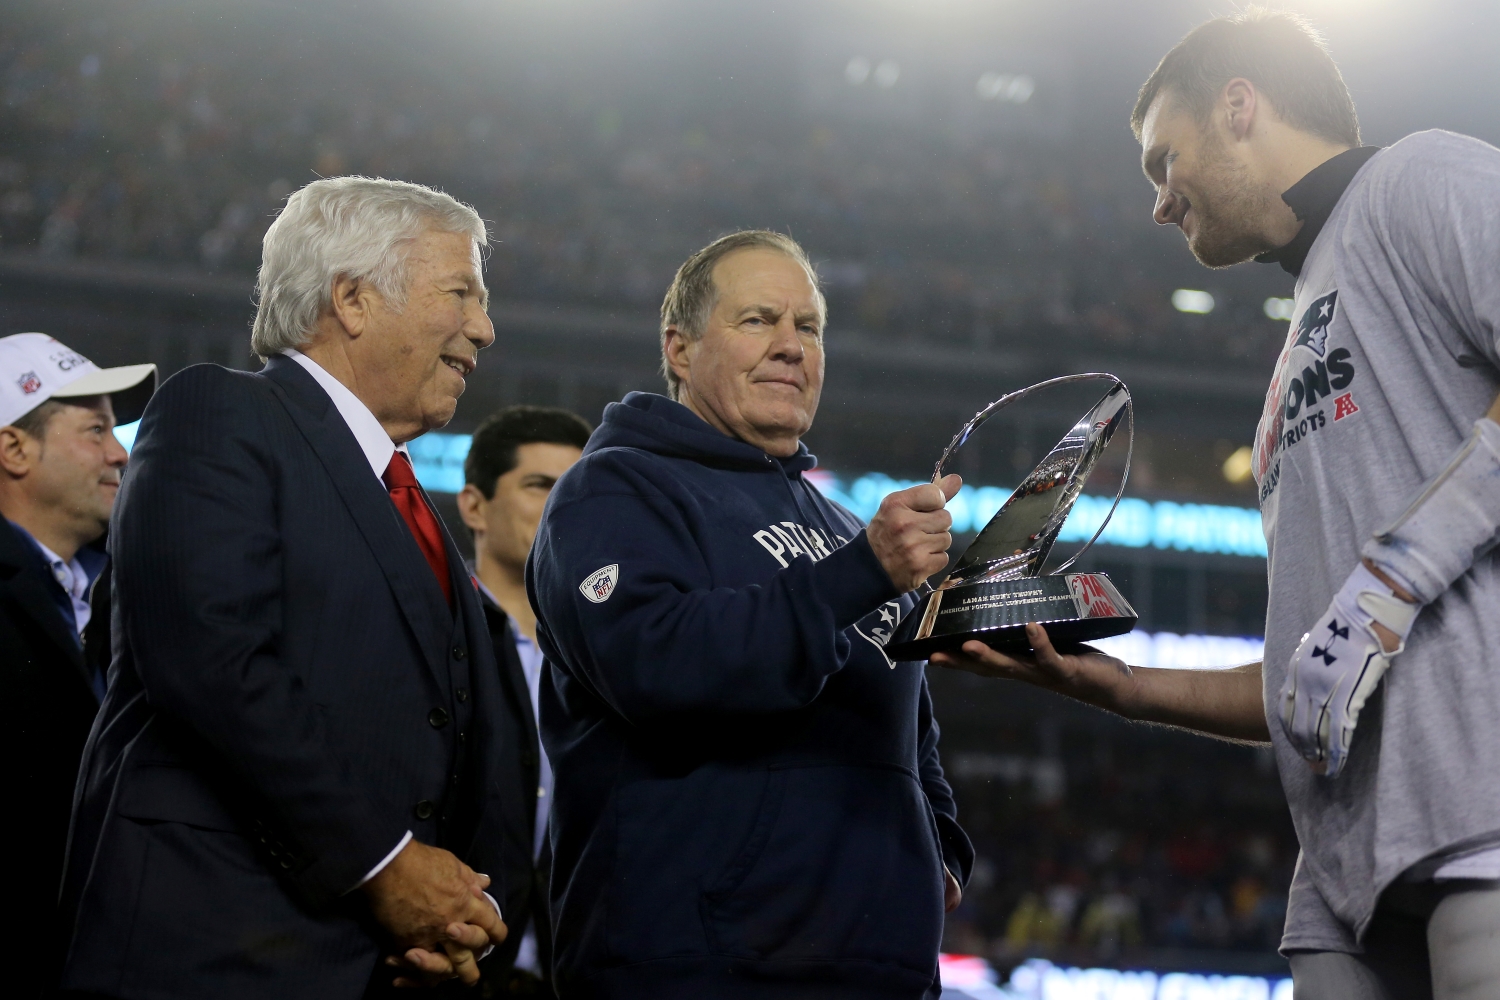 Tom Brady hands the Lamar Hunt Trophy to Bill Belichick as New England Patriots owner Robert Kraft watches.